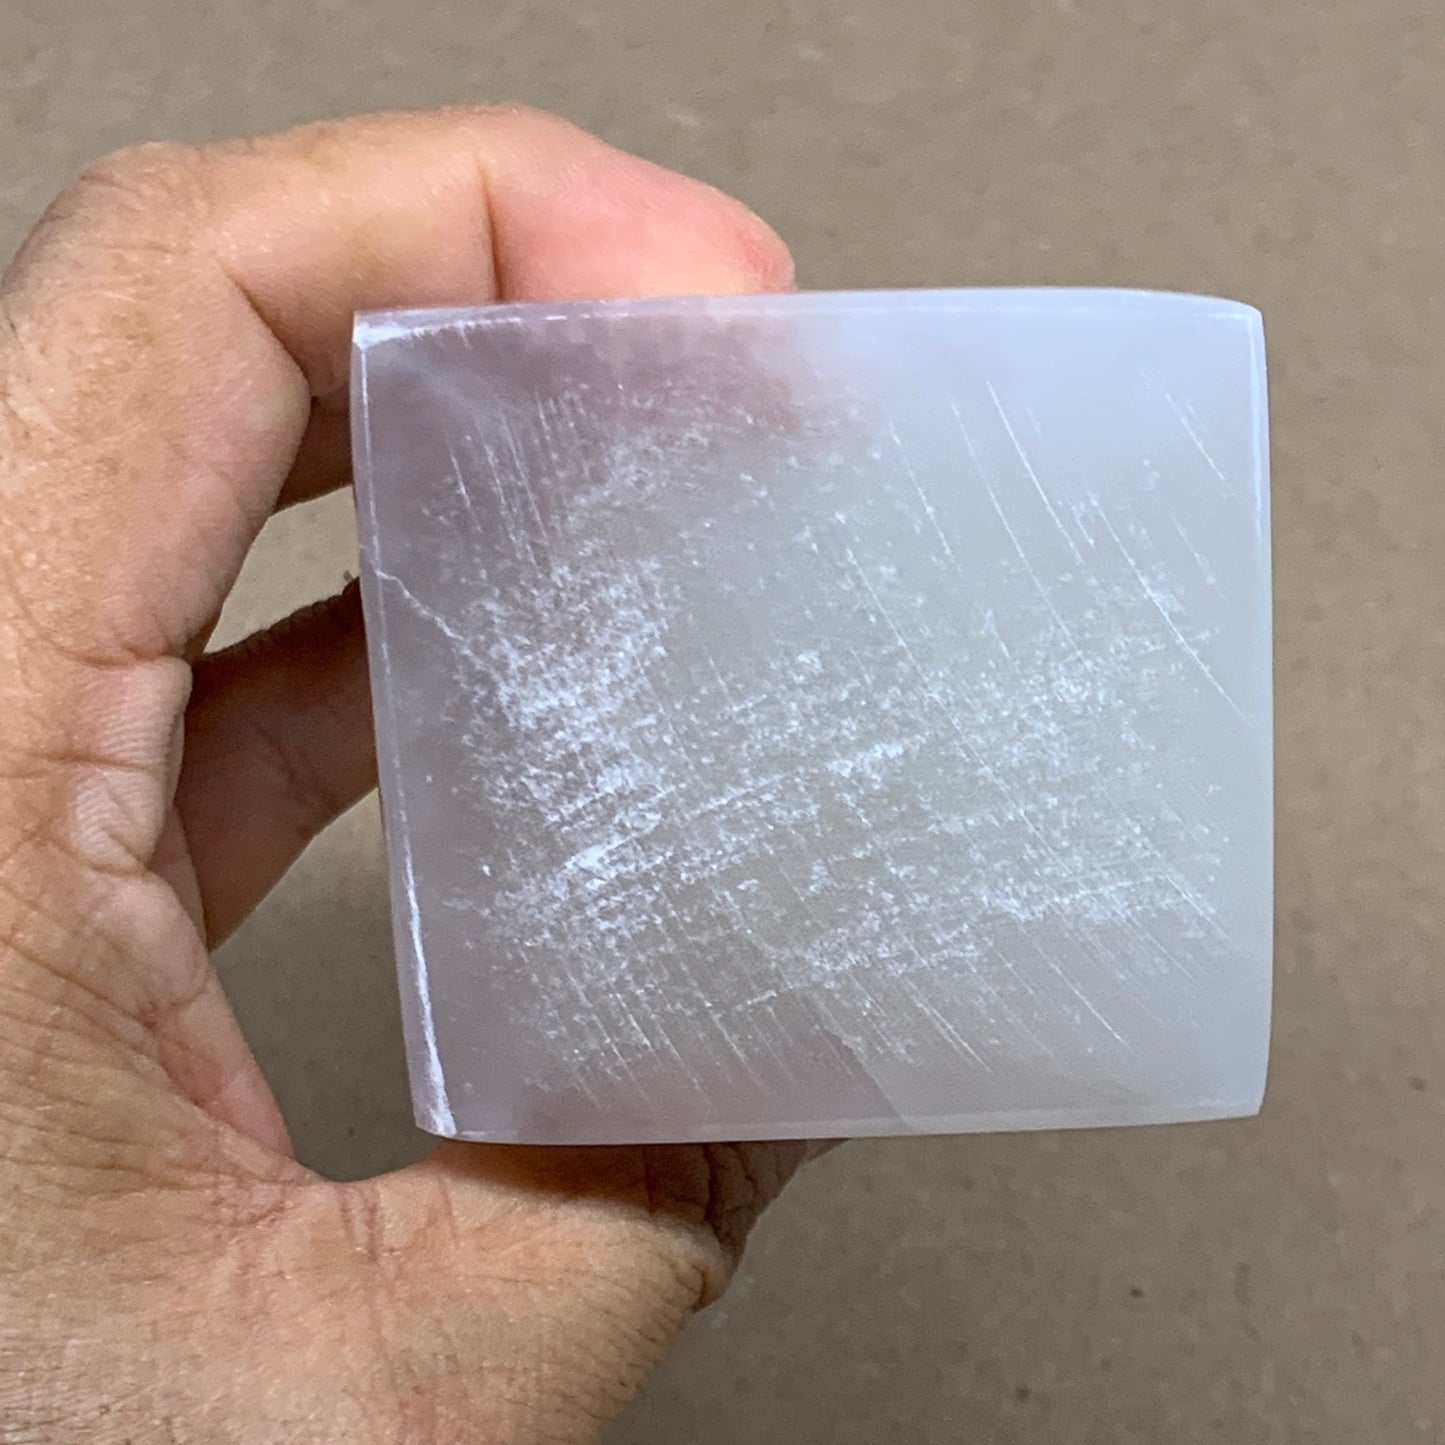 246g, 3.5"x2.1" White Selenite/Satin Spar Pyramid Crystal @Morocco, B24152